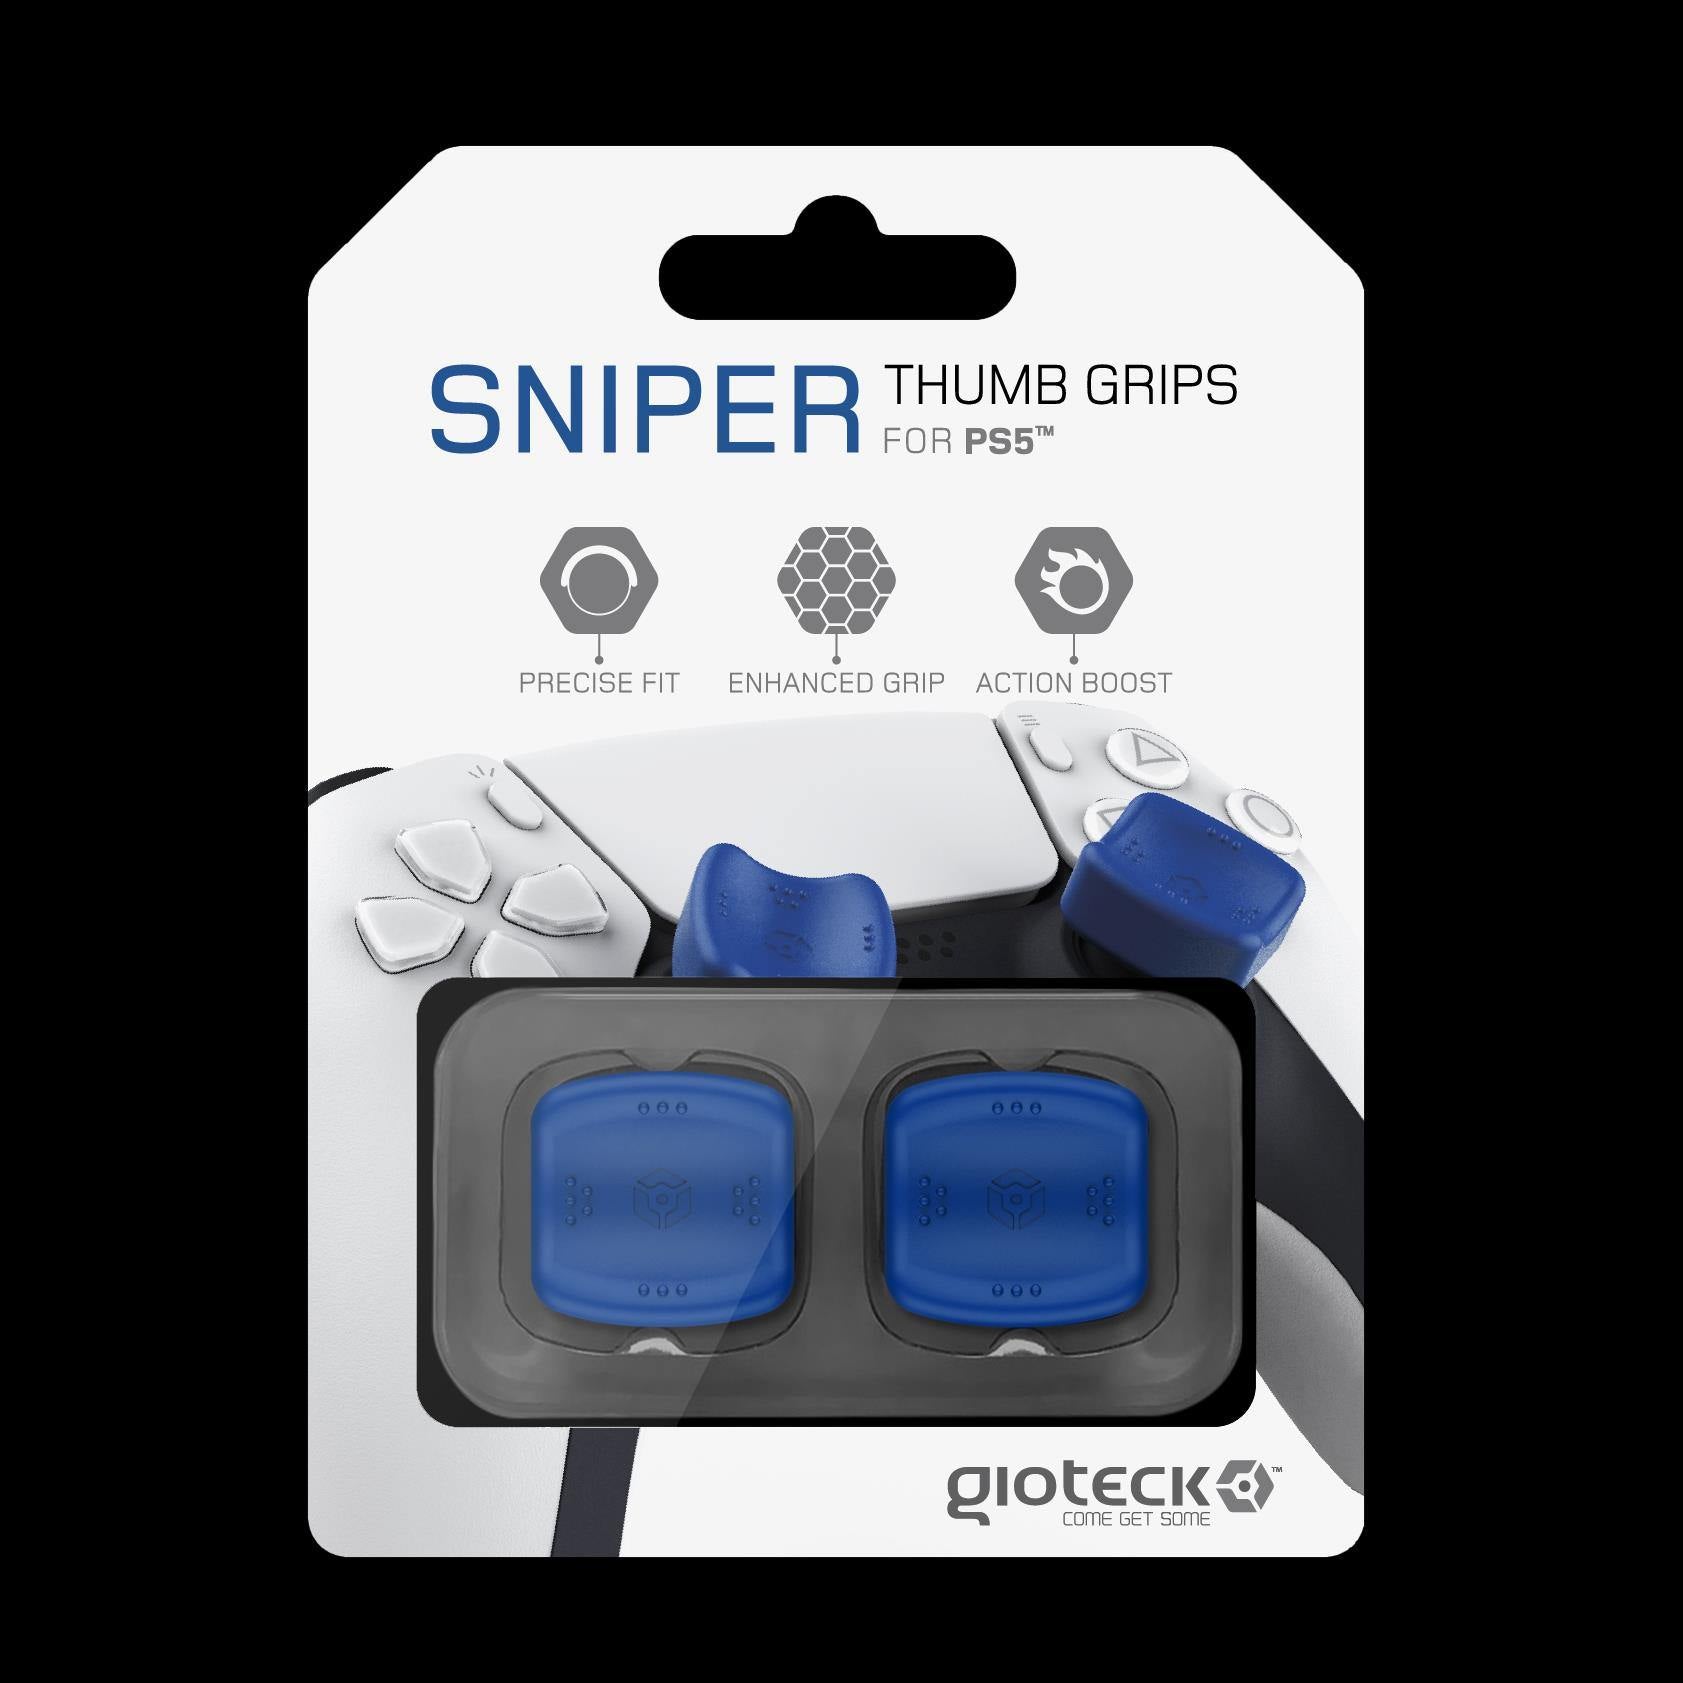 Gioteck - Reposes Pouce (Thumb Grips) Sniper Bleu pour PS5 (PS5) - flash vidéo